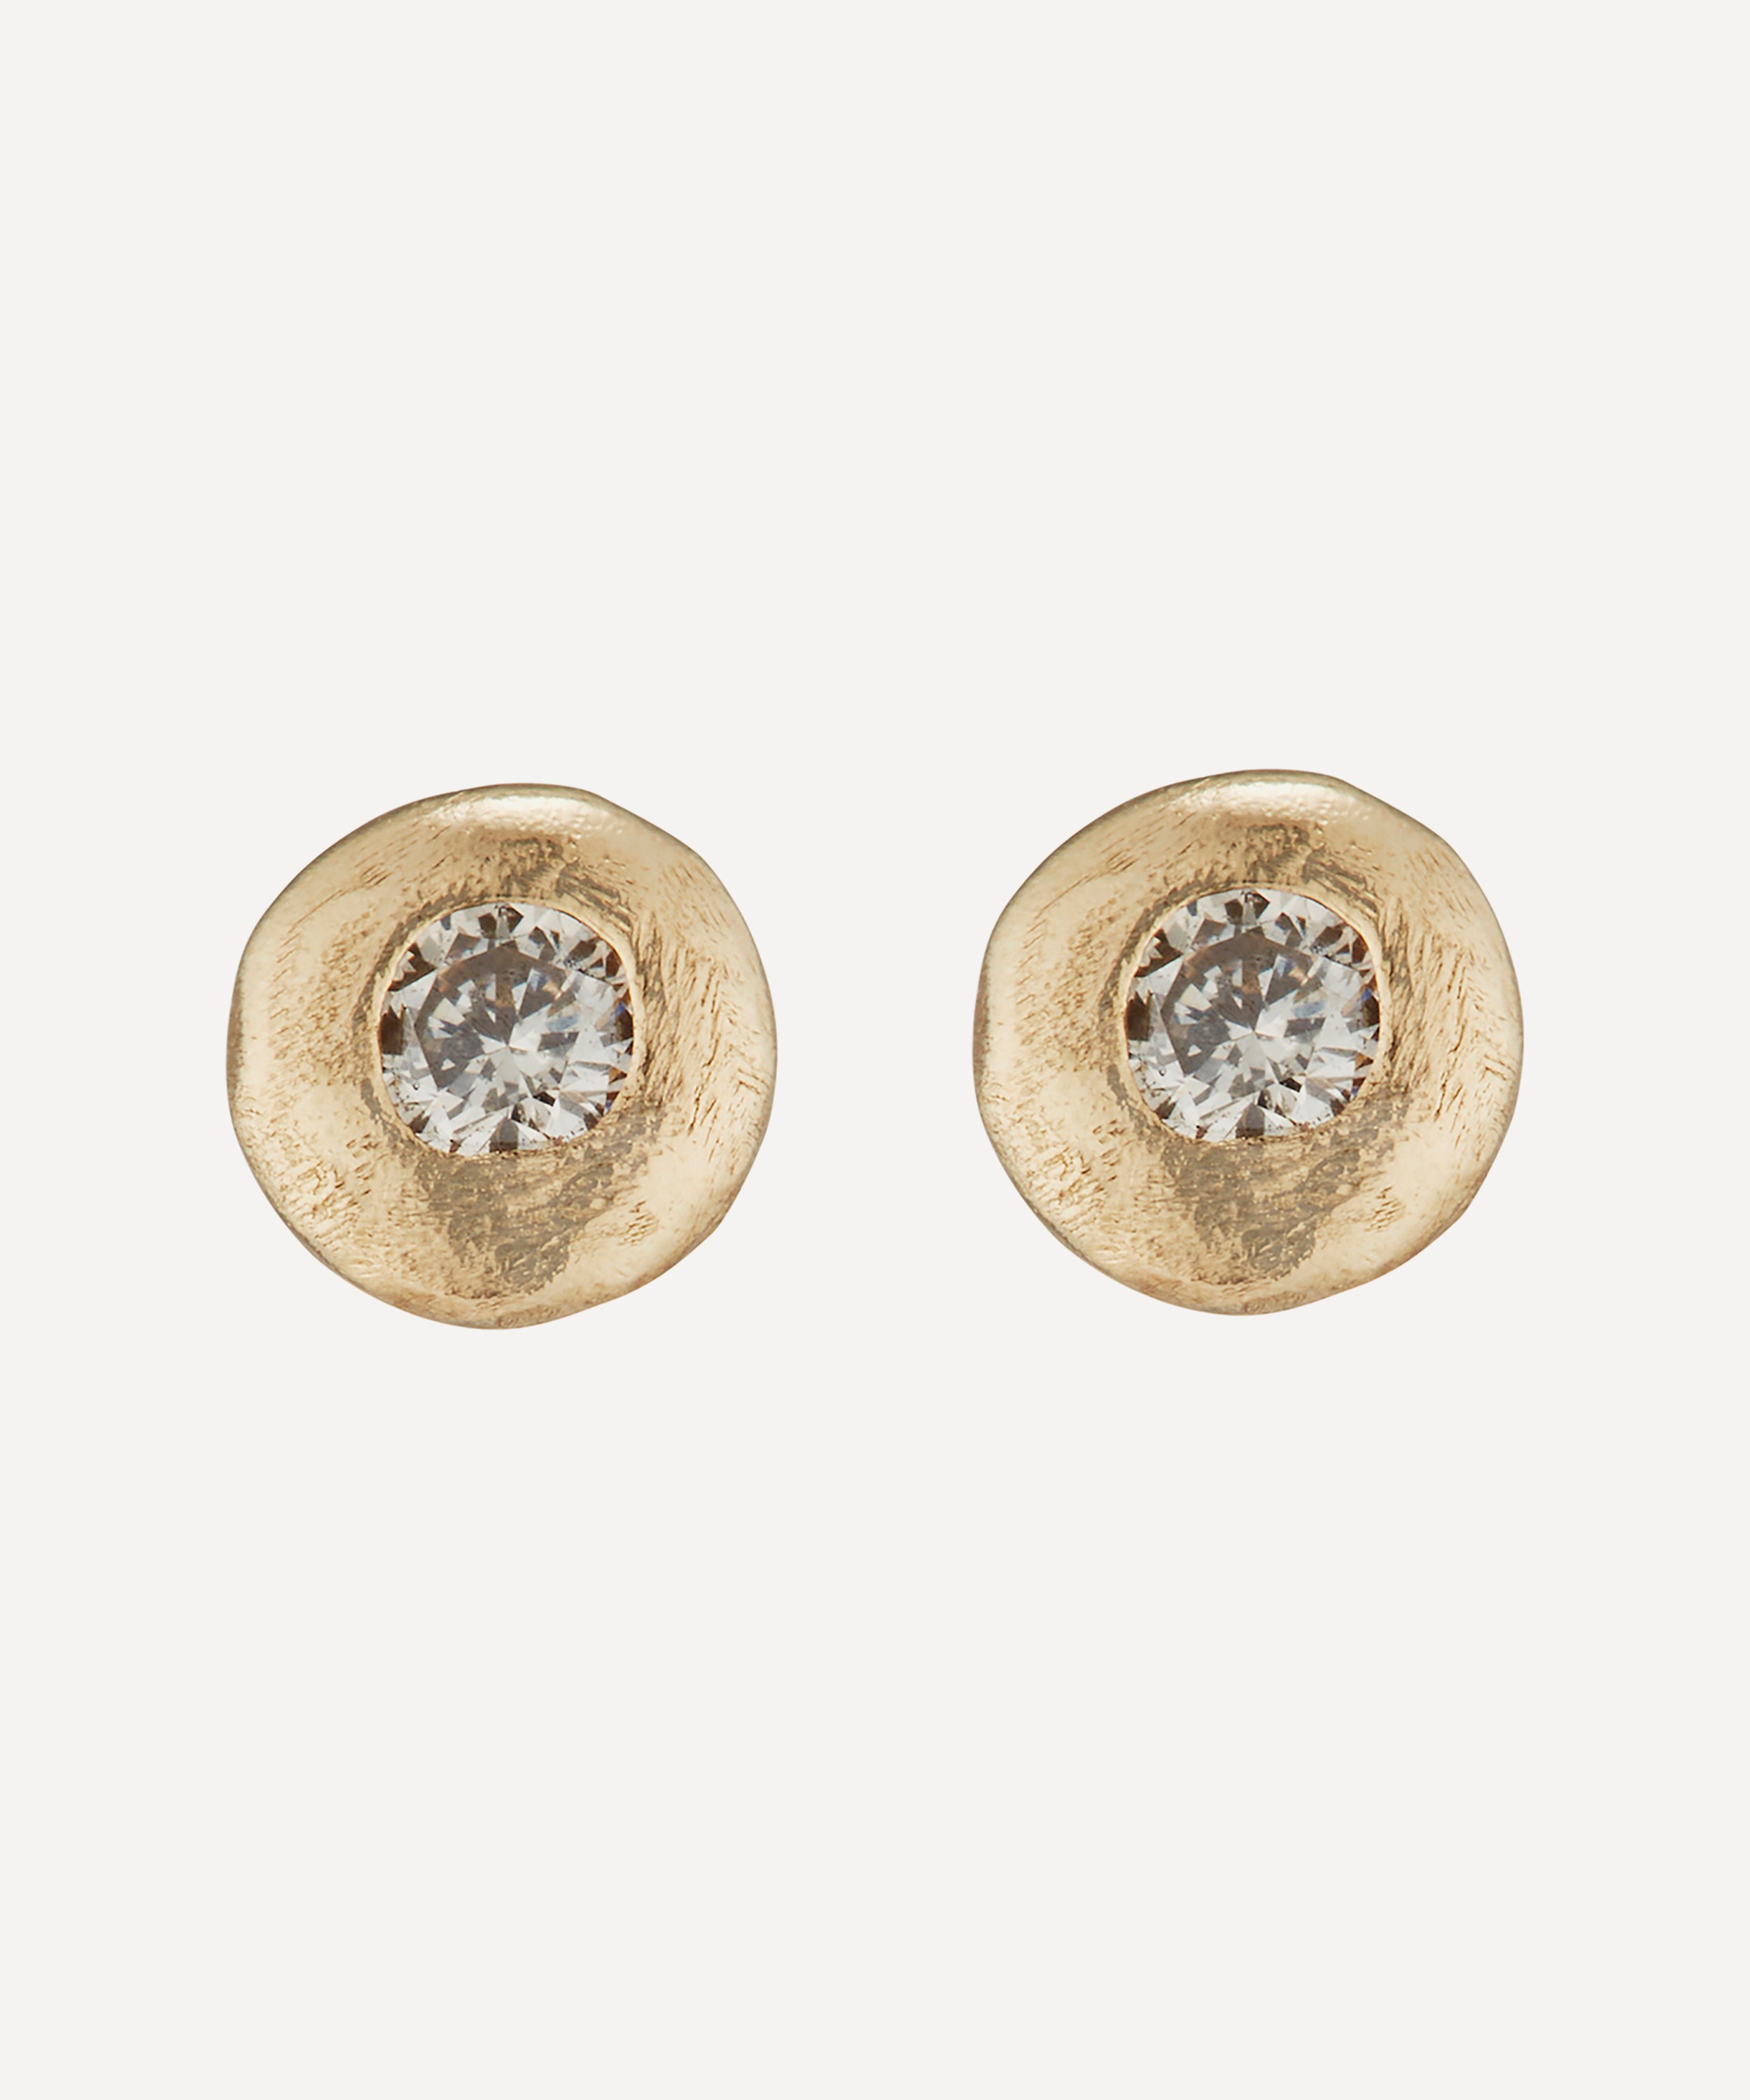 Ellis Mhairi Cameron - 14ct Gold LII White Diamond Mini Stud Earrings